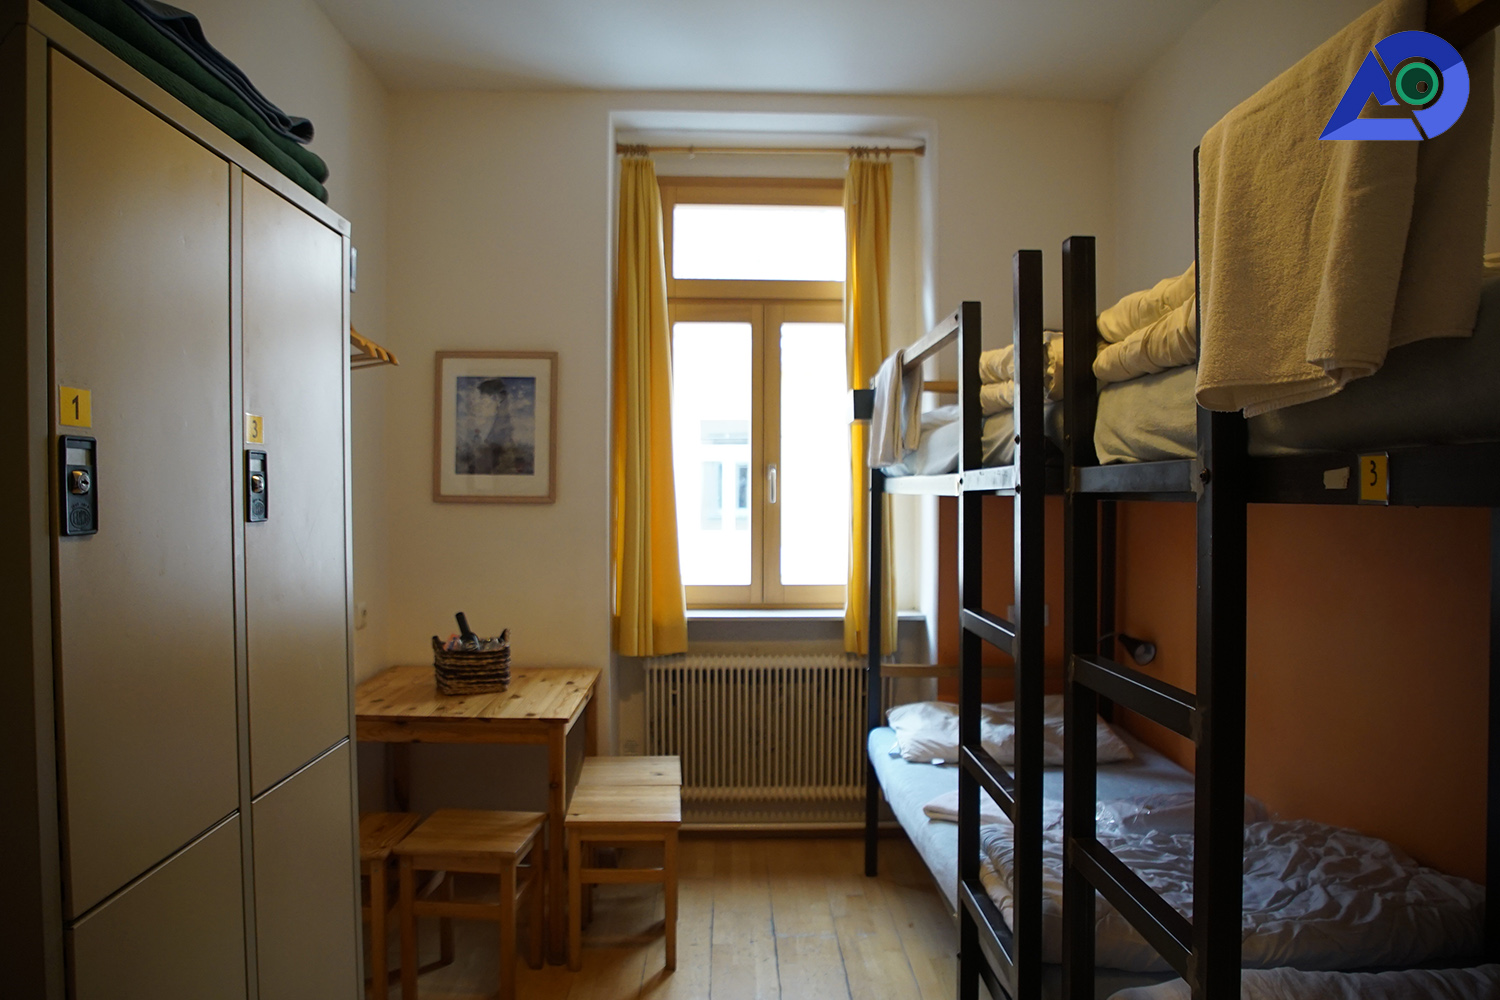 Room Quality of Hostel Ruthensteiner